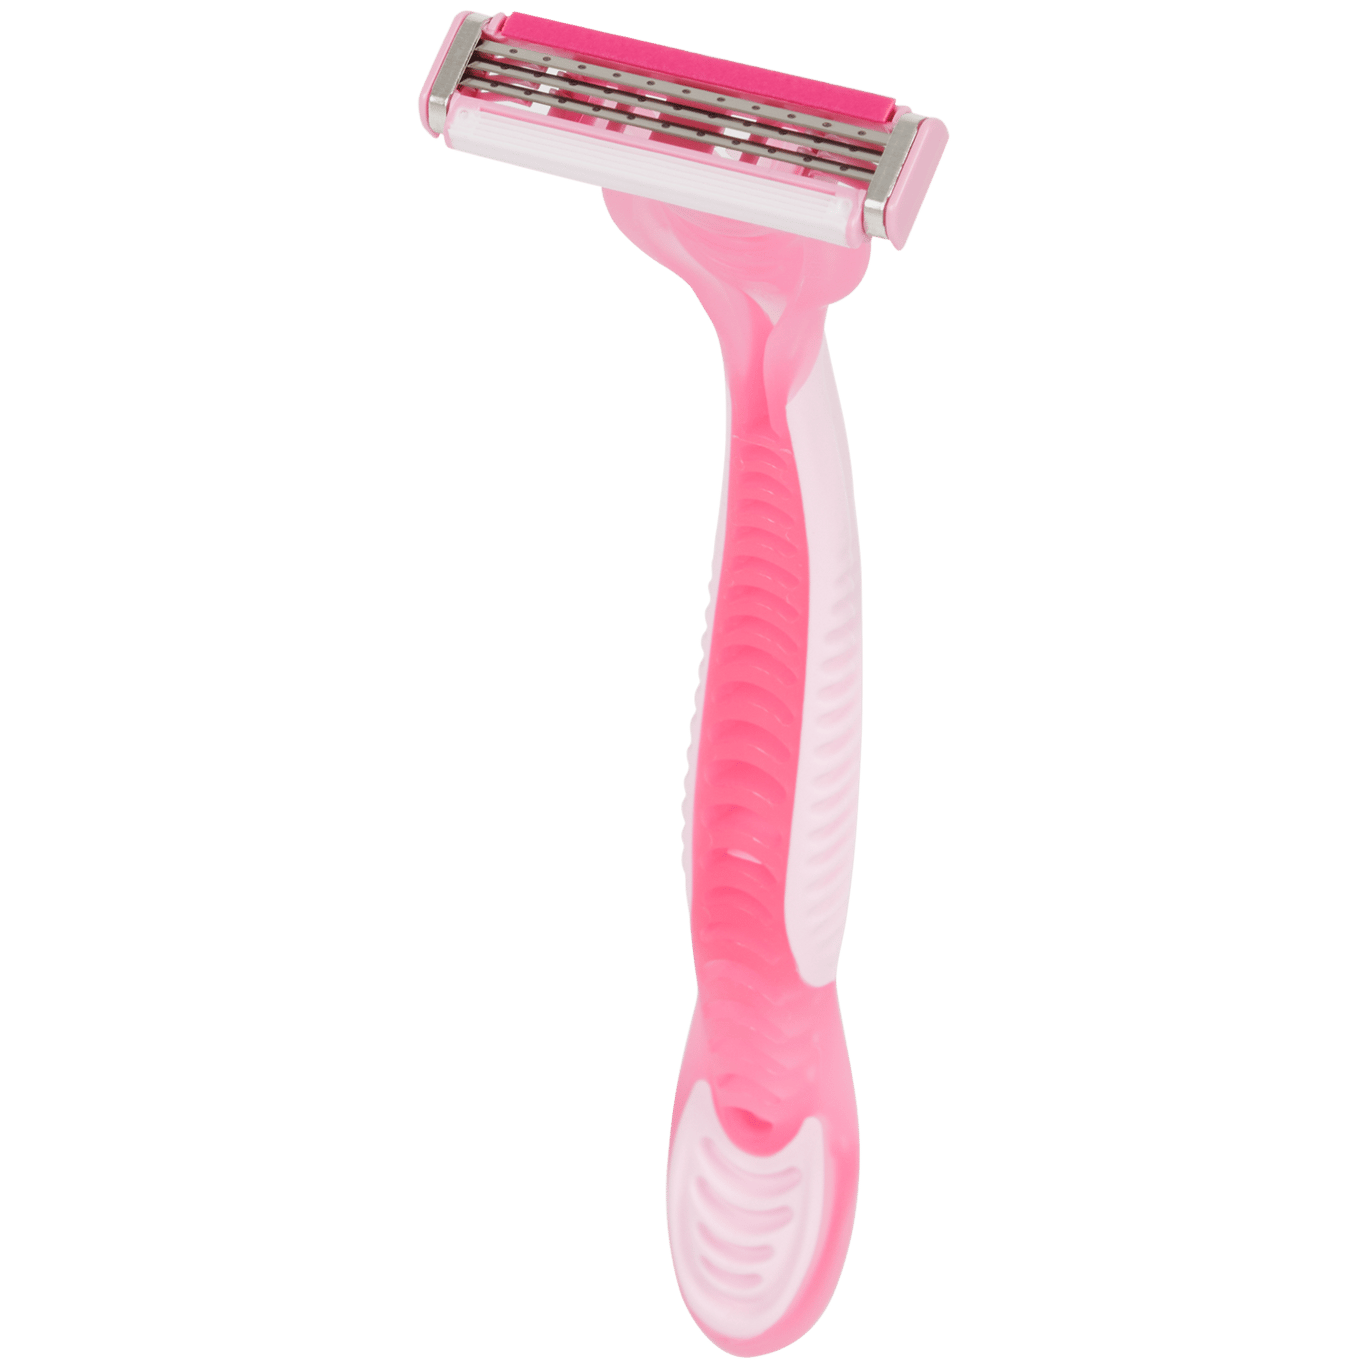 Maszynki do golenia Gillette Simply Venus